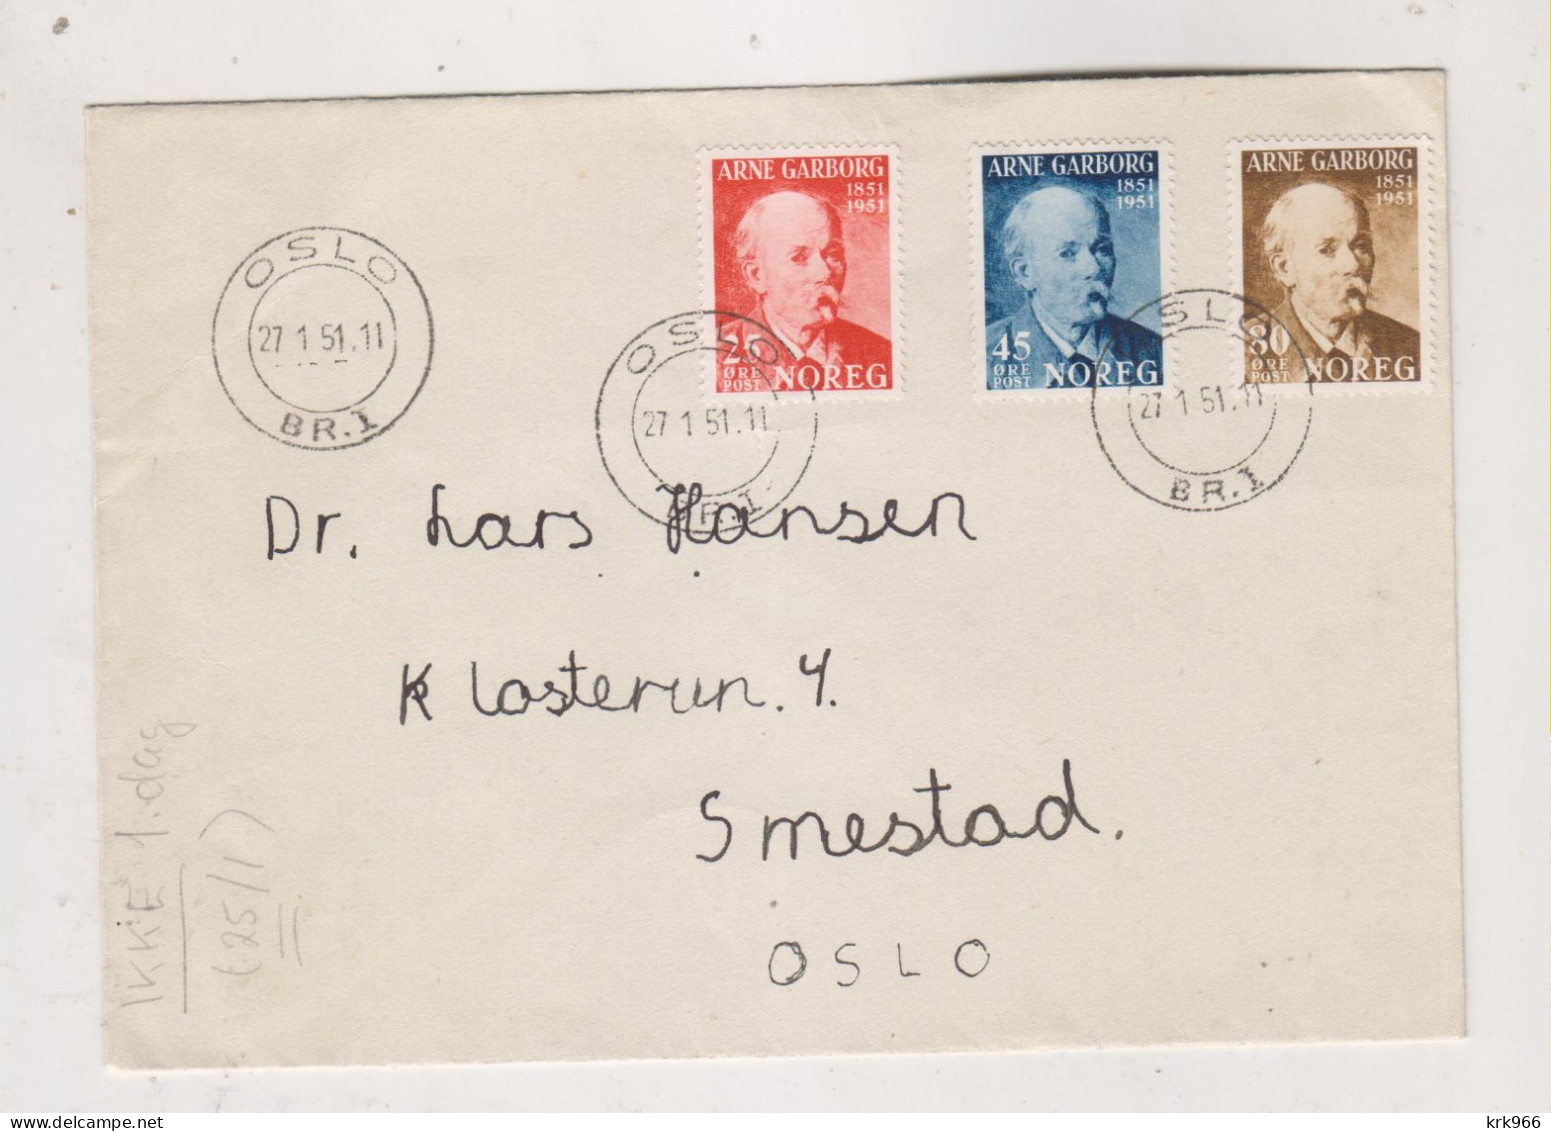 NORWAY 1951 OSLO Nice Cover - Briefe U. Dokumente